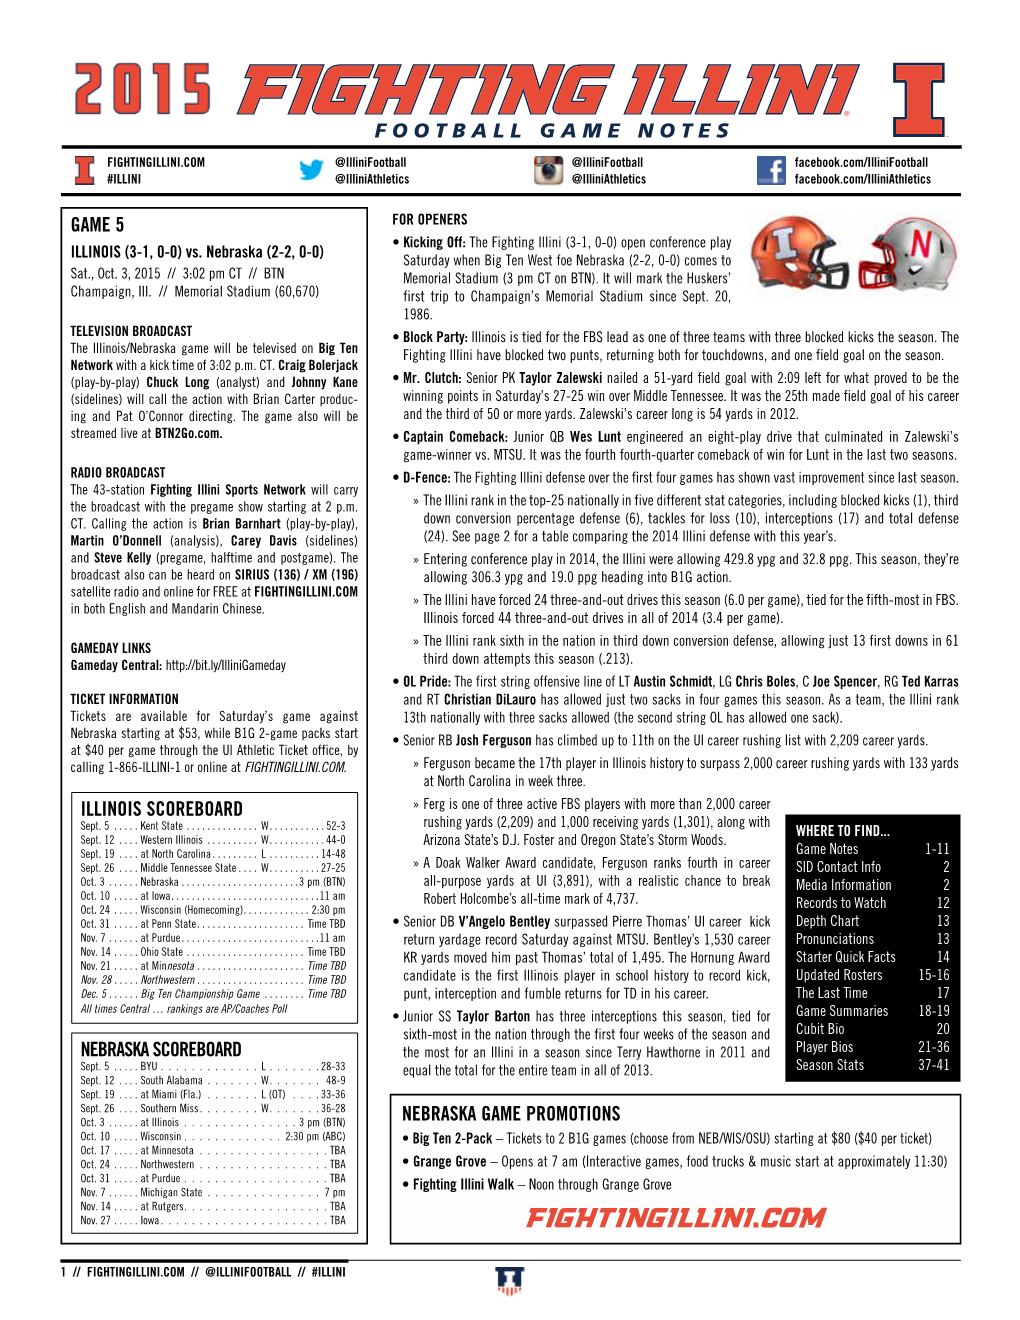 Game 5 Illinois Scoreboard Nebraska Scoreboard Nebraska Game Promotions Football Game Notes